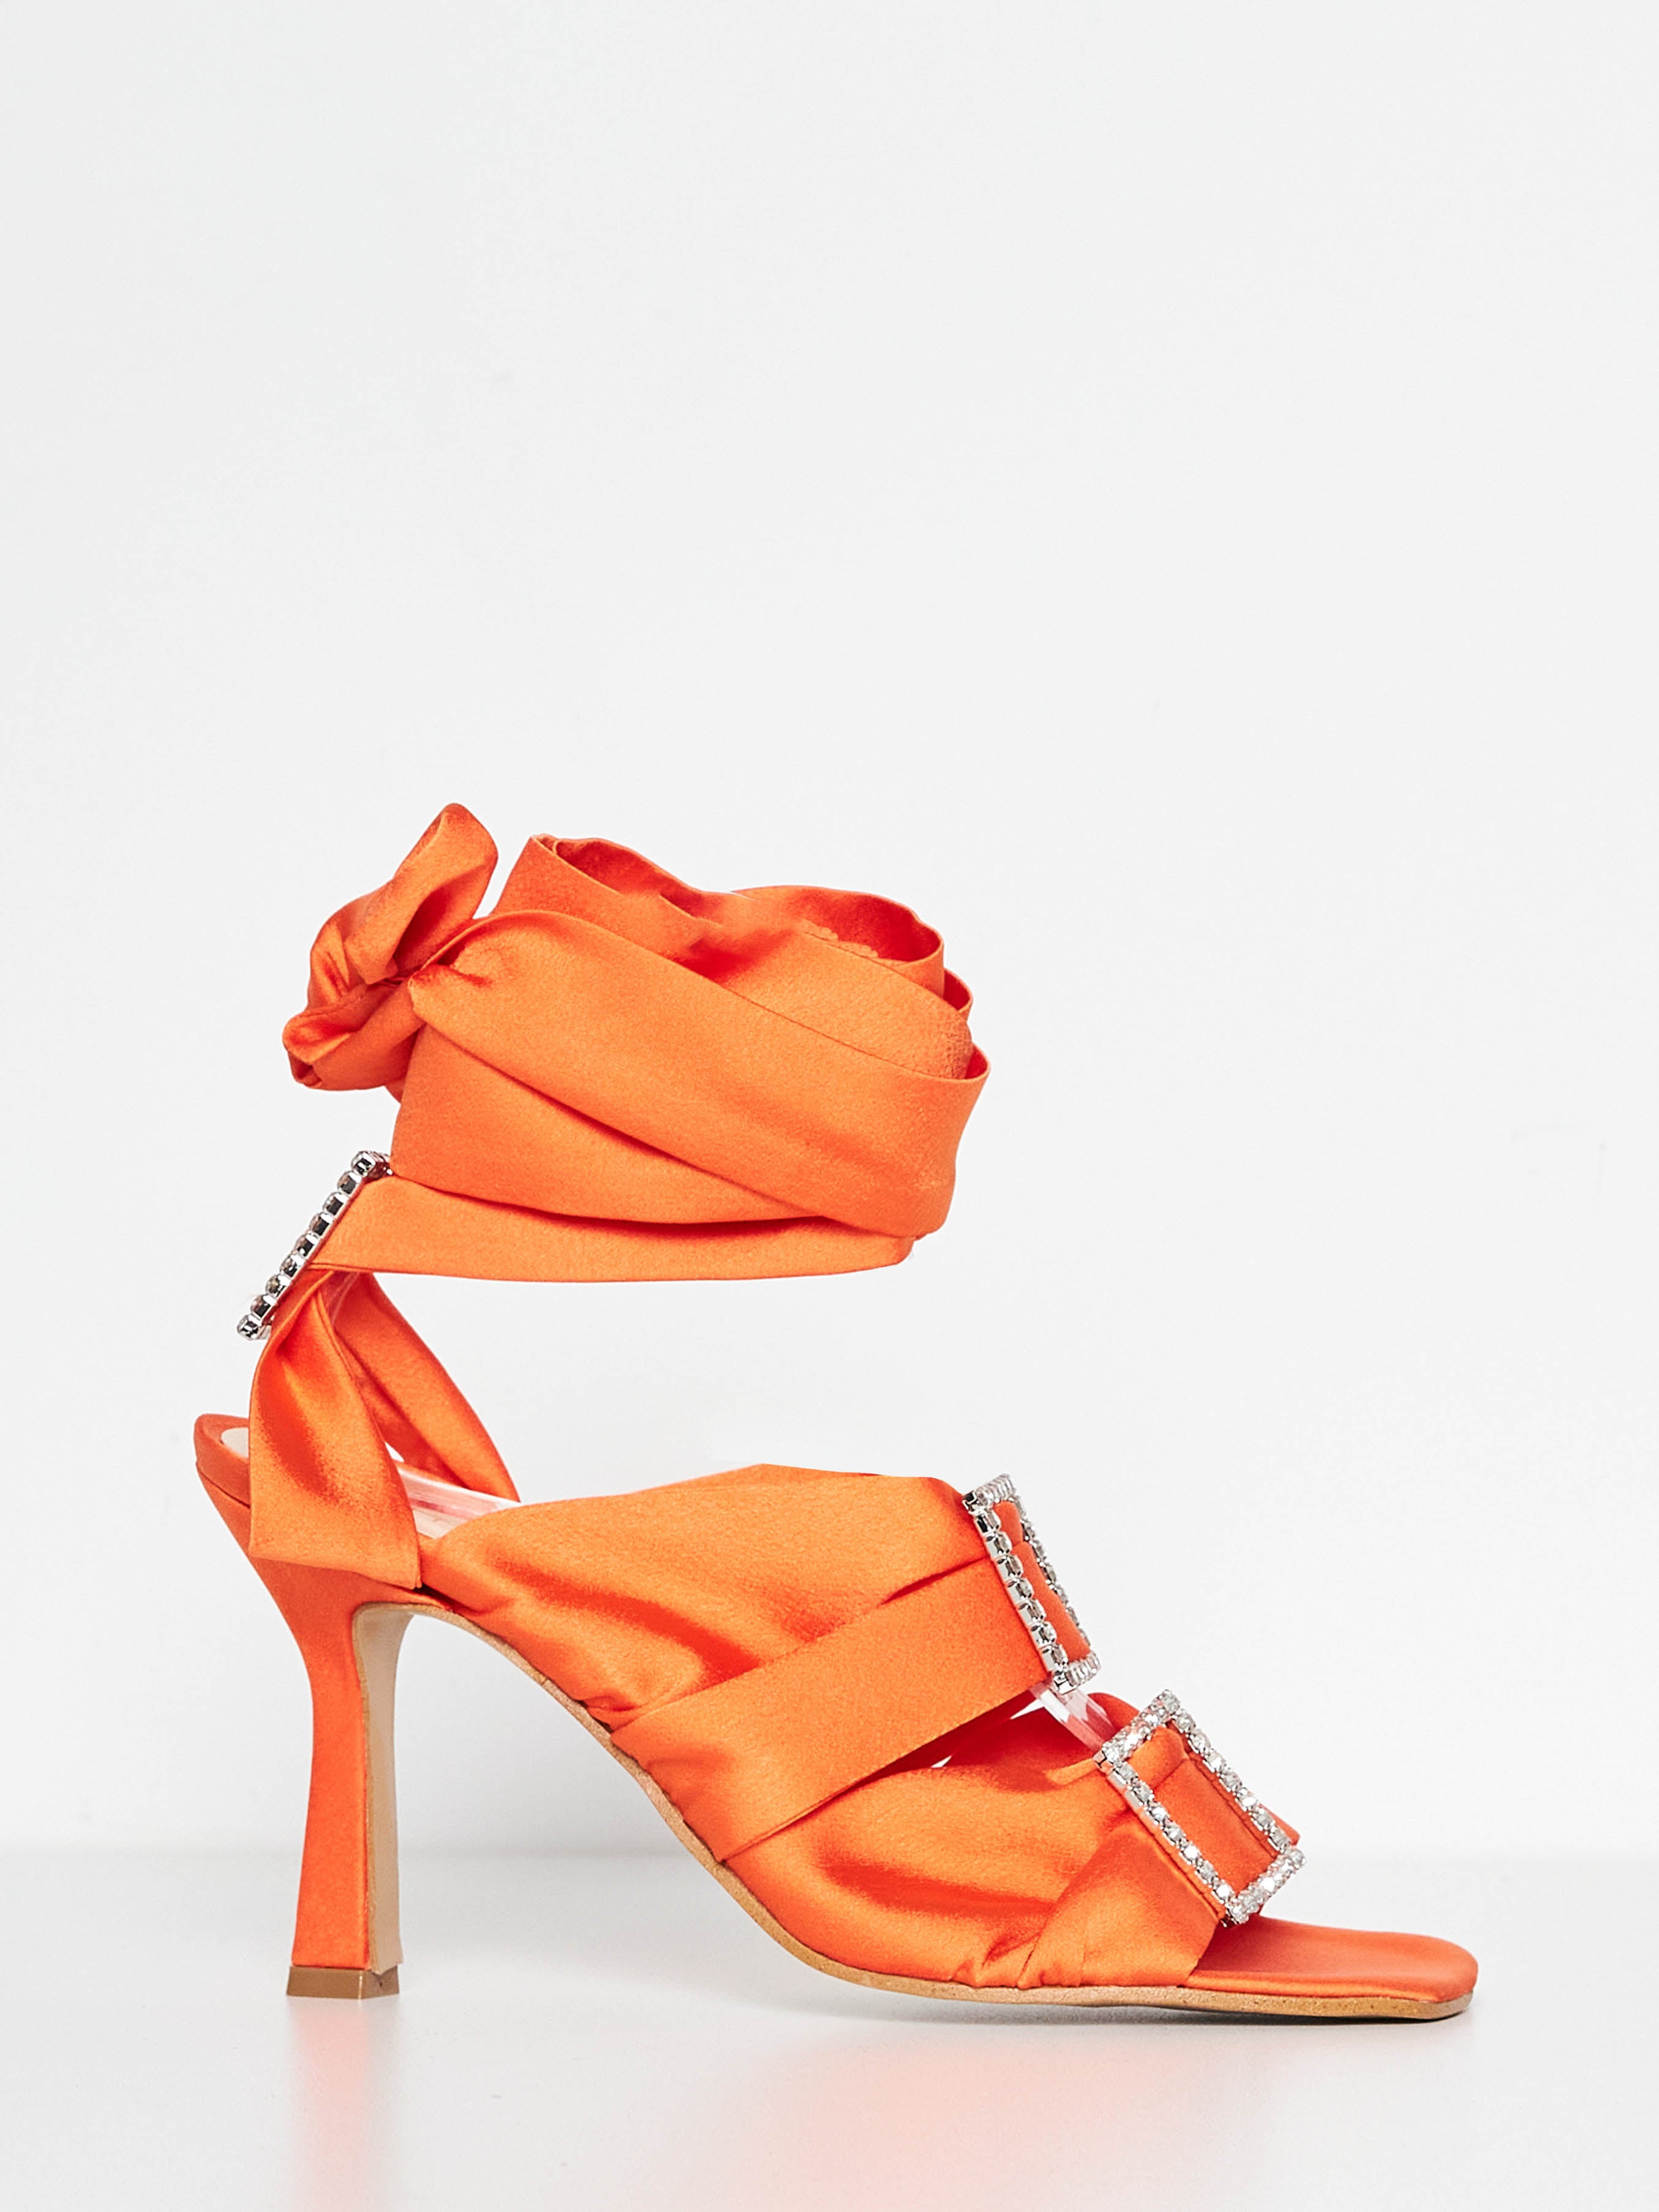 Matilde Couture orange sandals with crossed laces